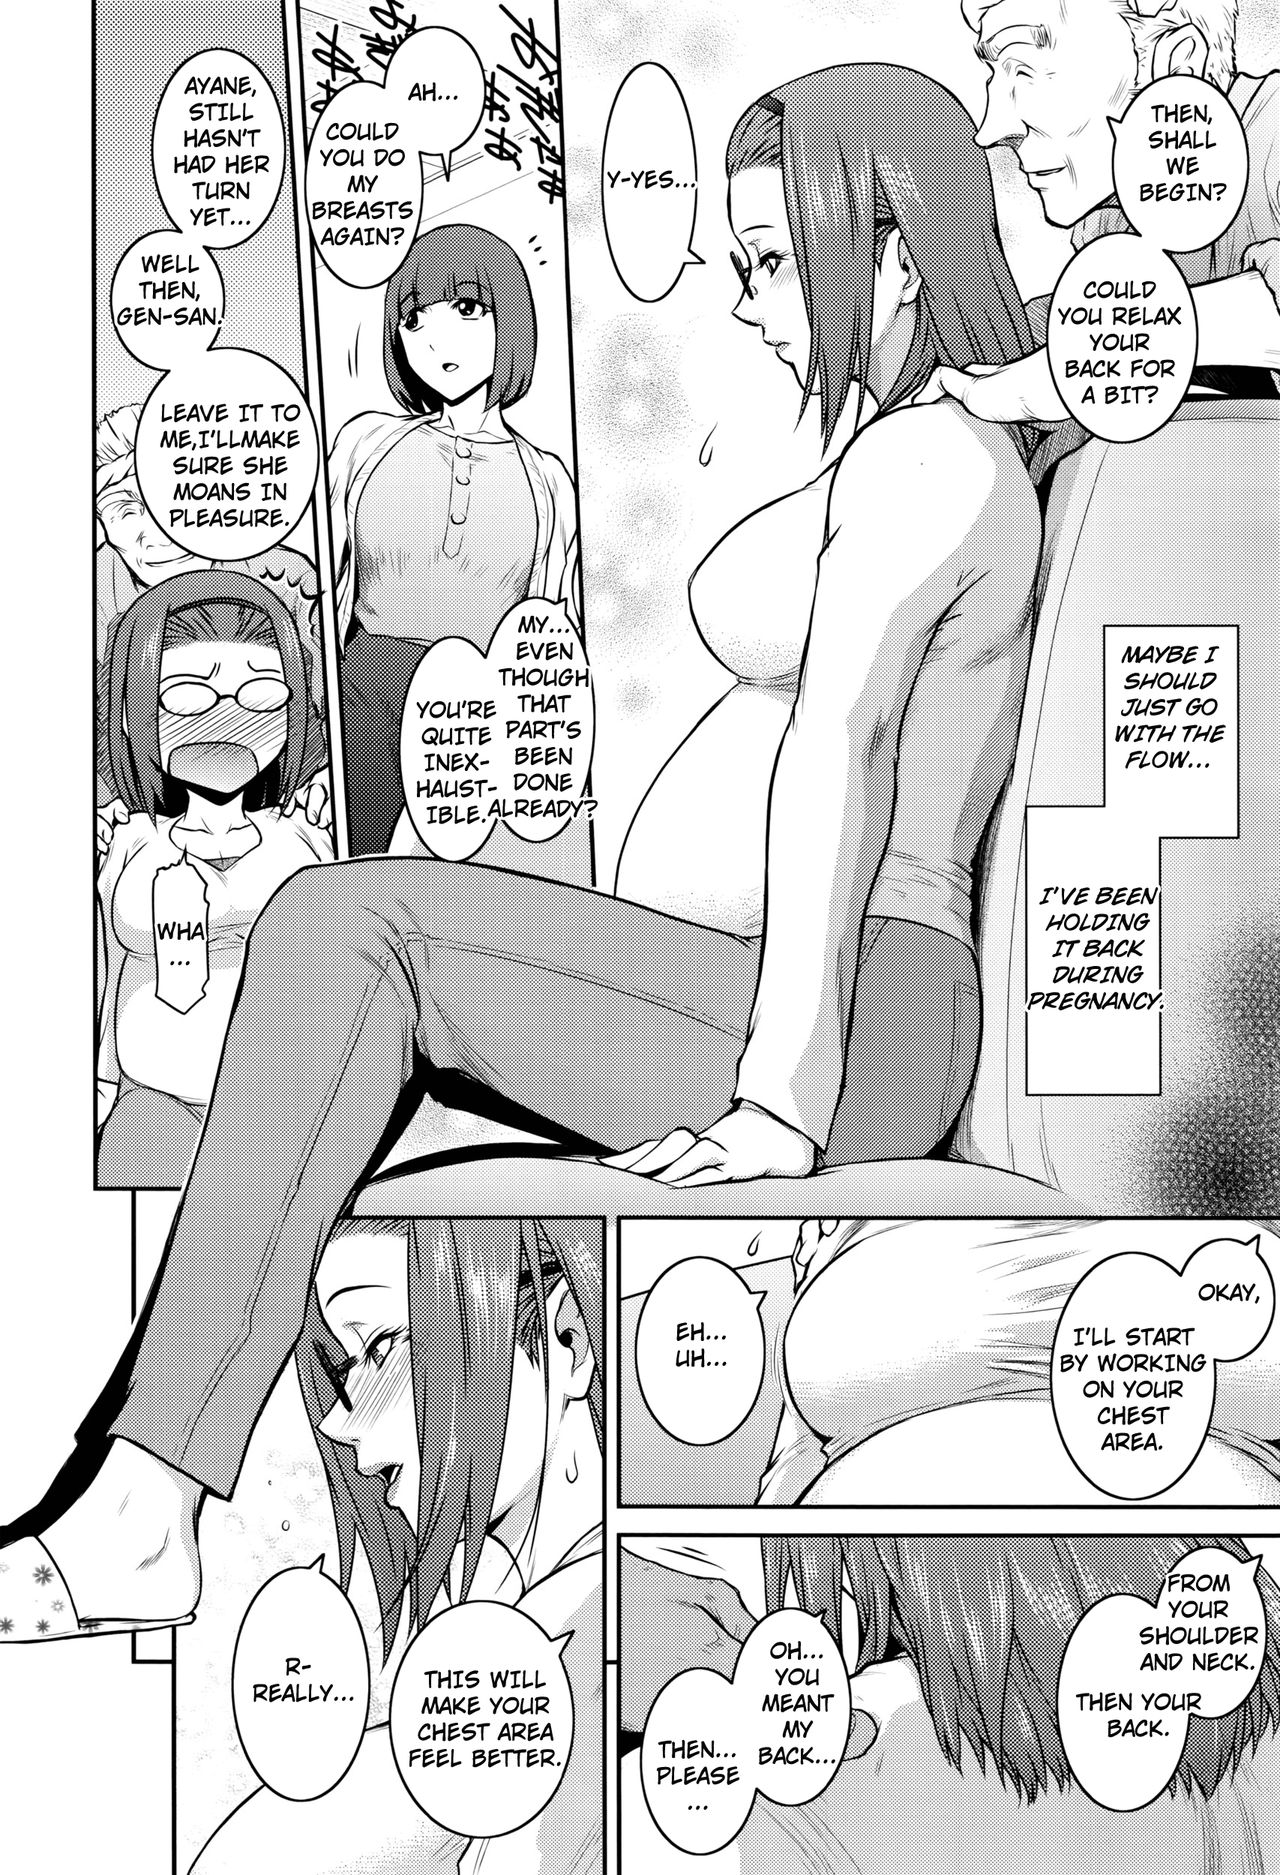 Read Cherry Womb Comic Exe 01 [english] Hentai Comics Hentai Online Porn Manga And Doujinshi